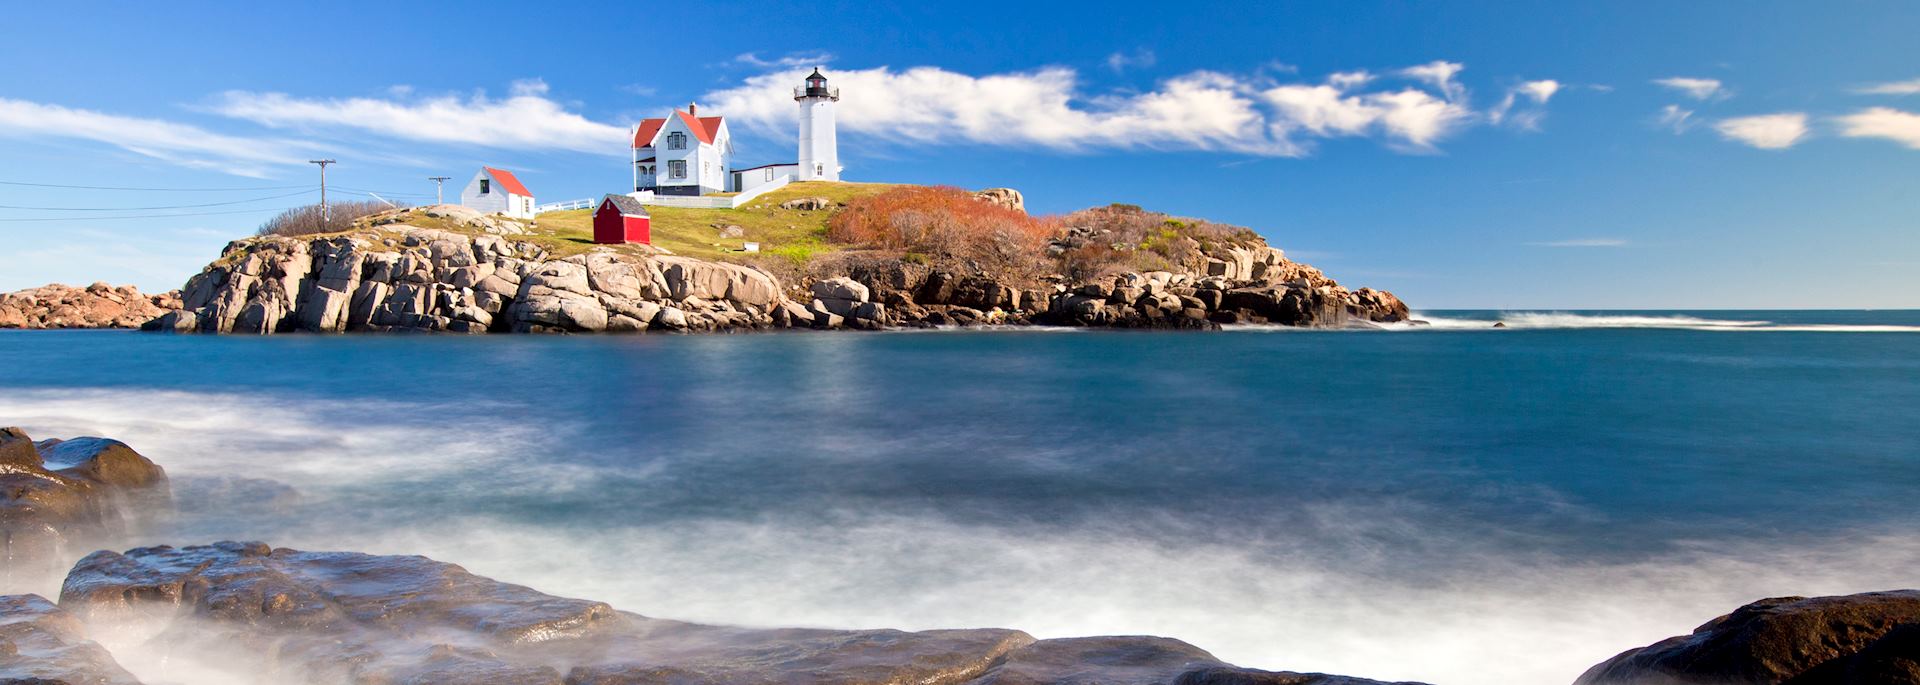 Lighthouse off the Maine coast